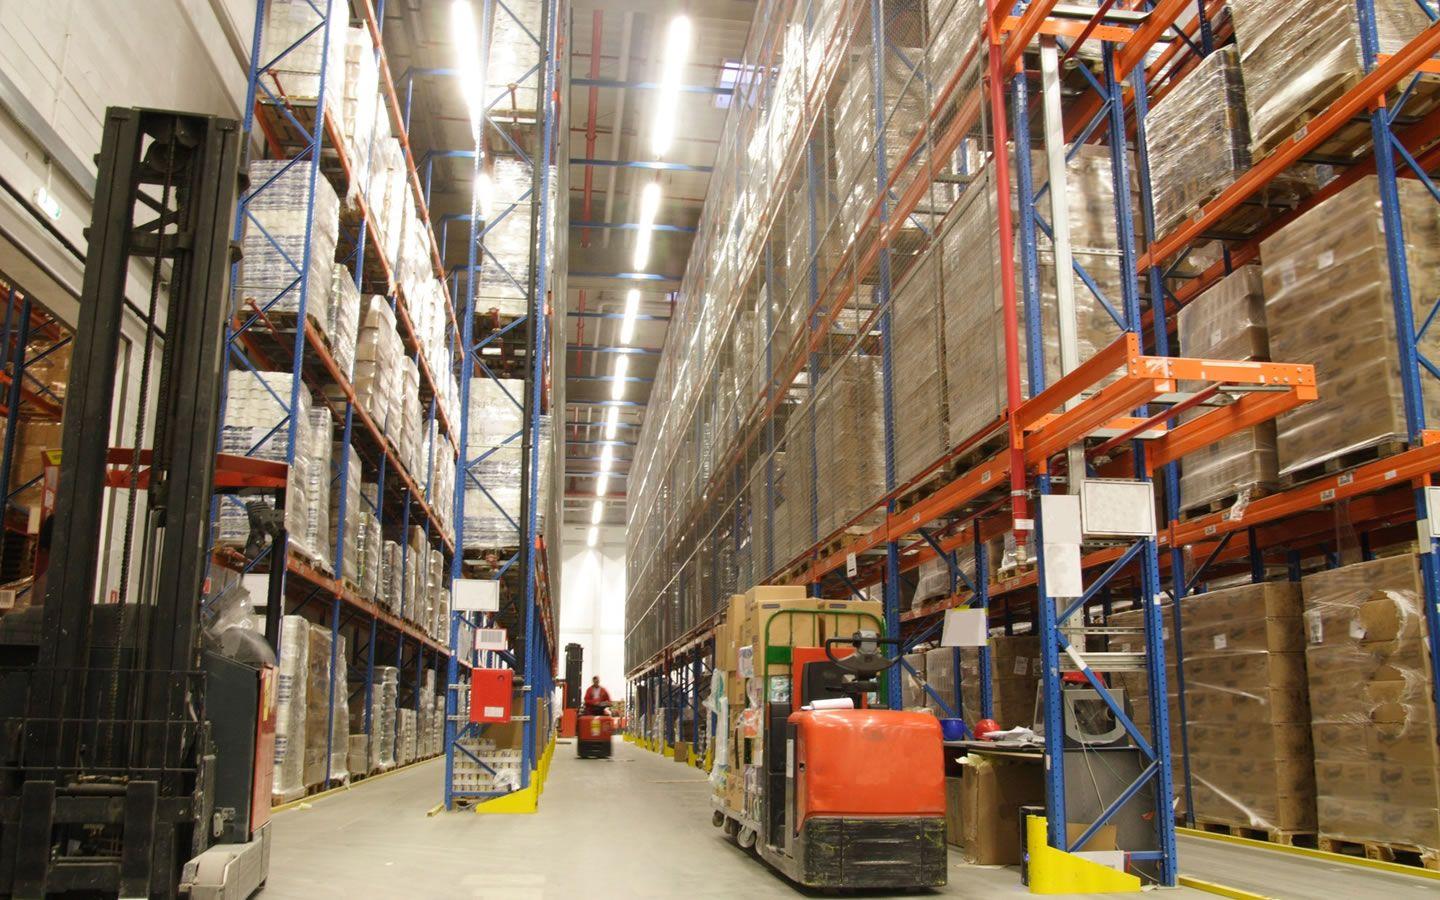 Intervento di Gentile al “Shipping, Forwarding&Logistics meet Industry”